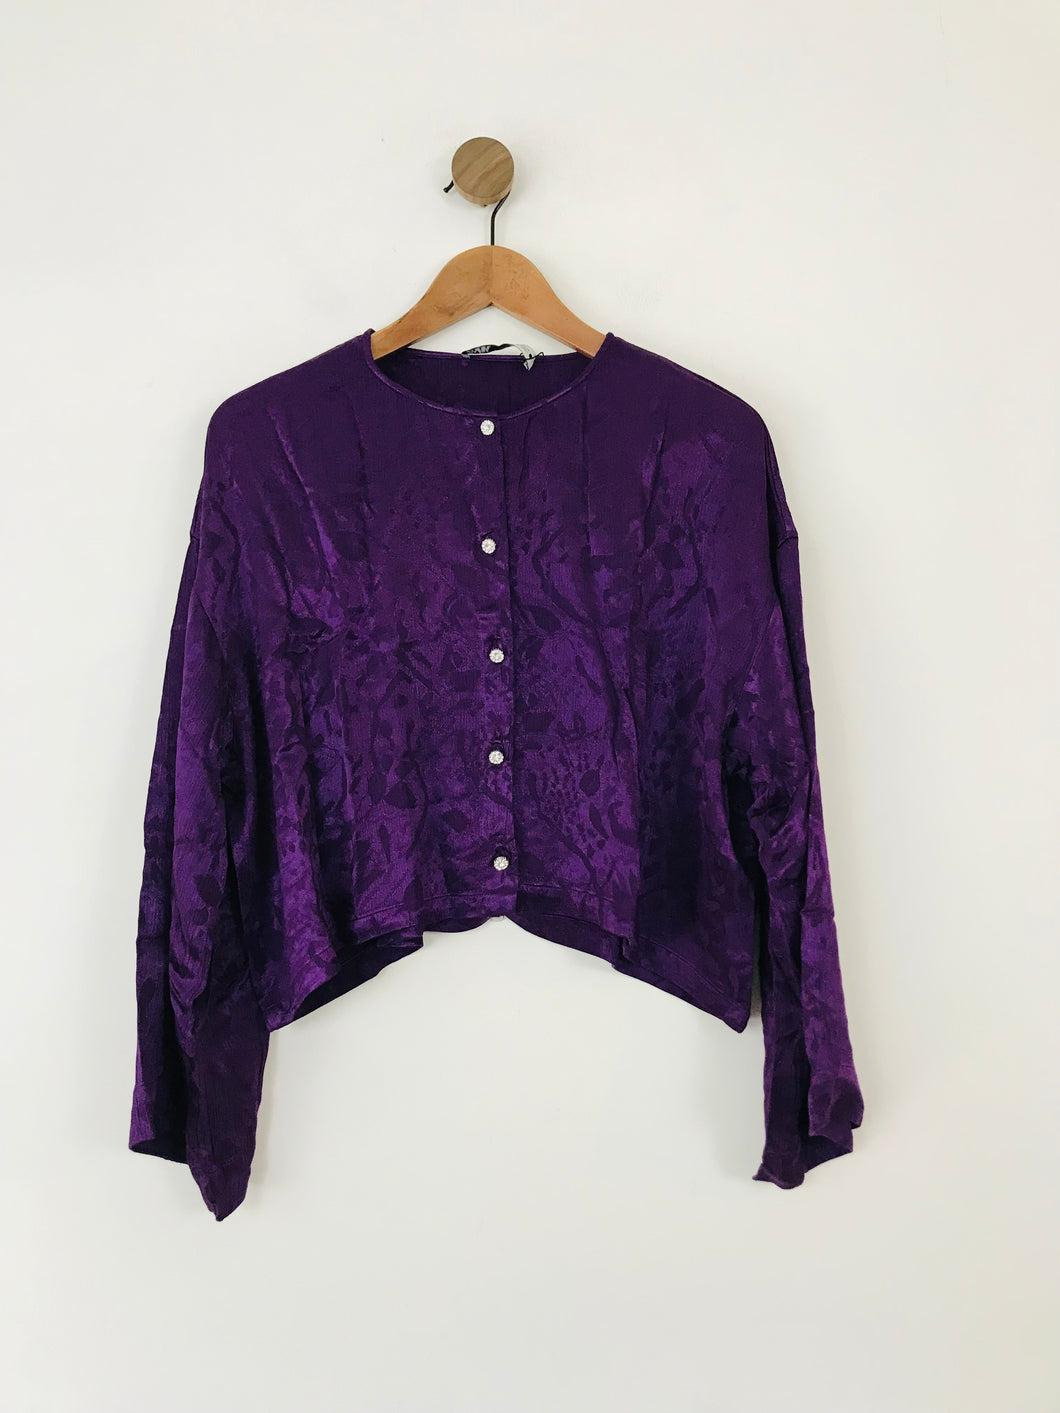 Zara Women's Button Up Cropped Blouse  | XL UK16 | Purple